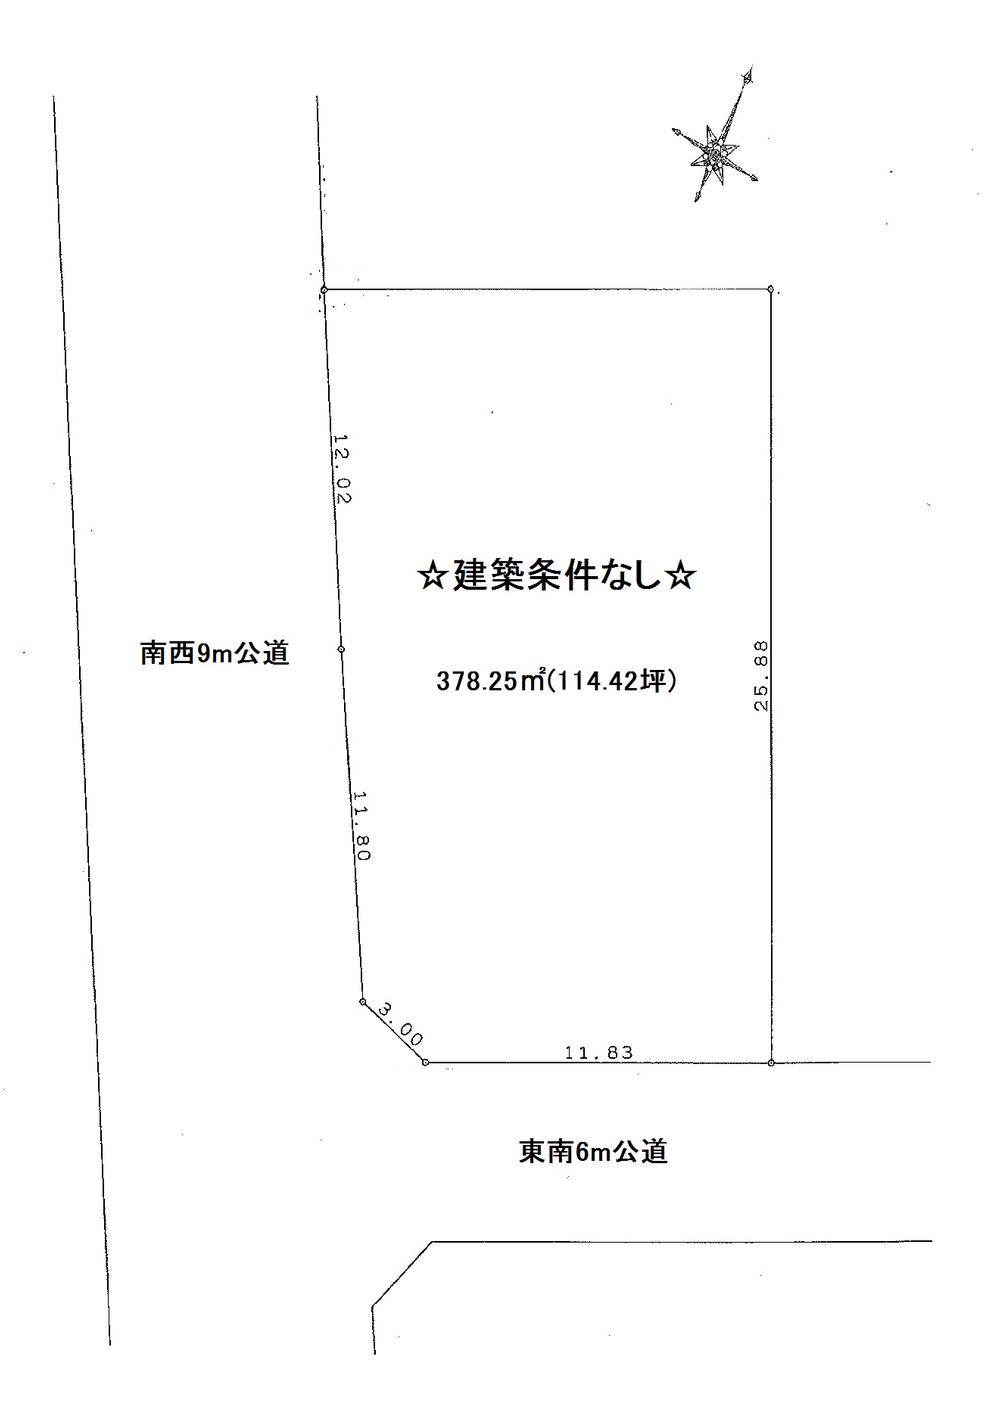 Compartment figure. Land price 86 million yen, Land area 378.25 sq m